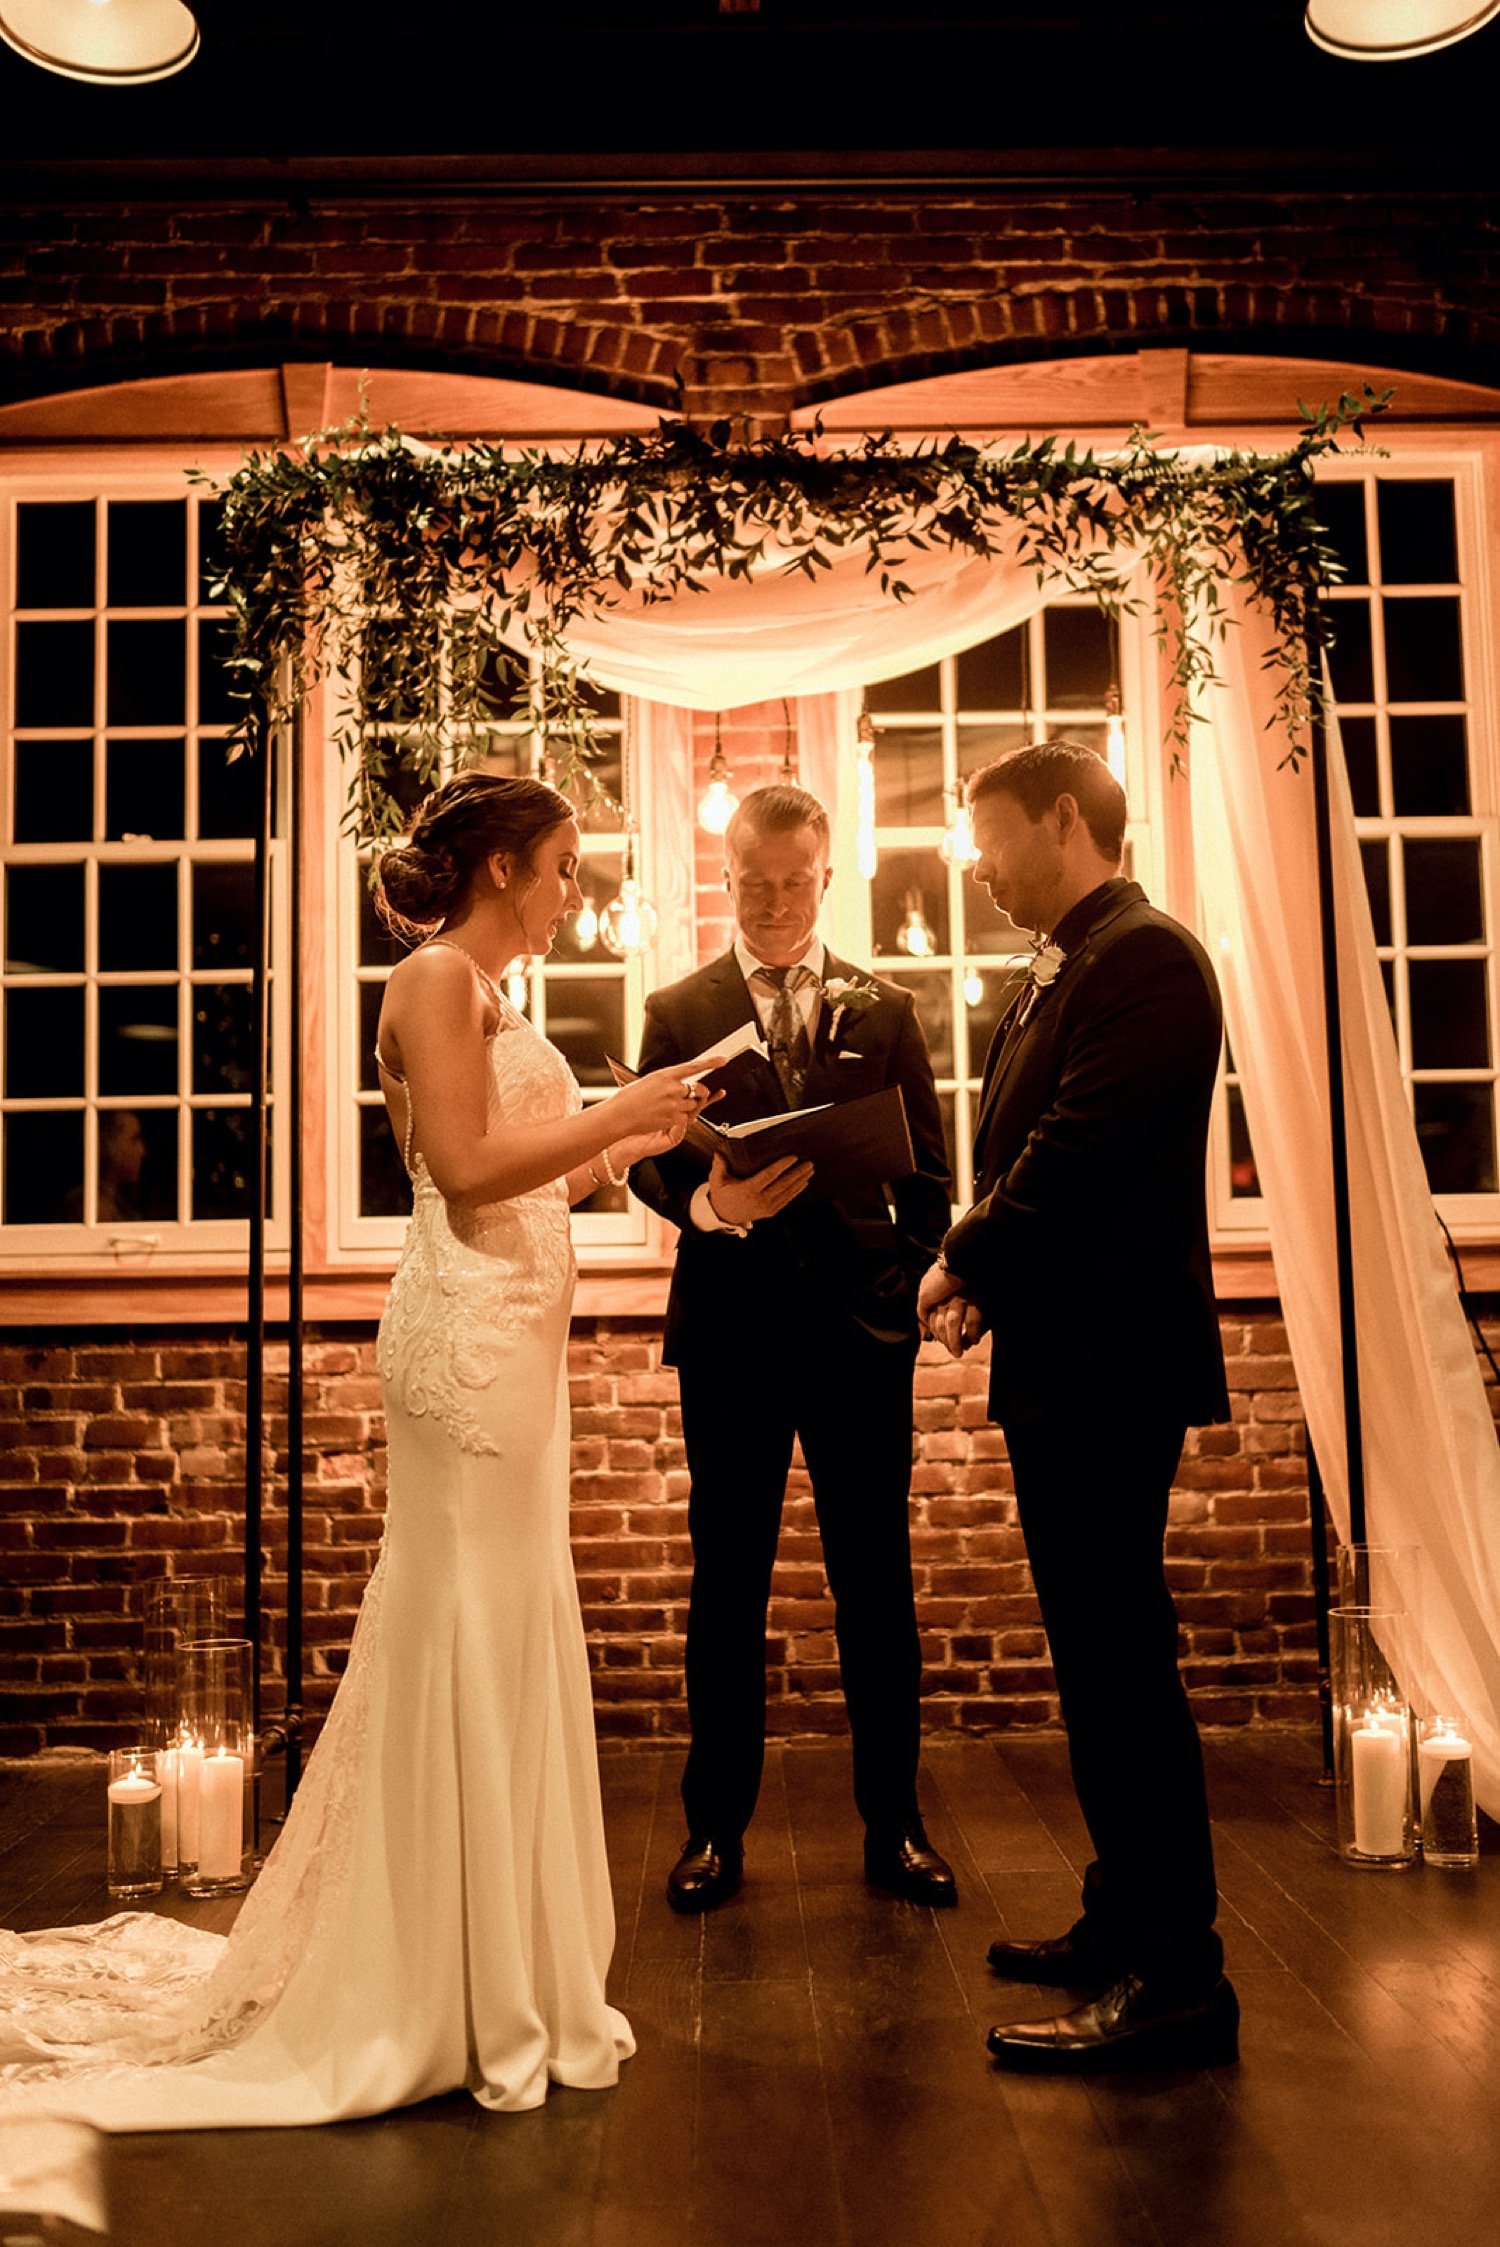 Indianapolis-tinker-house-wedding-ceremony.jpg.jpg